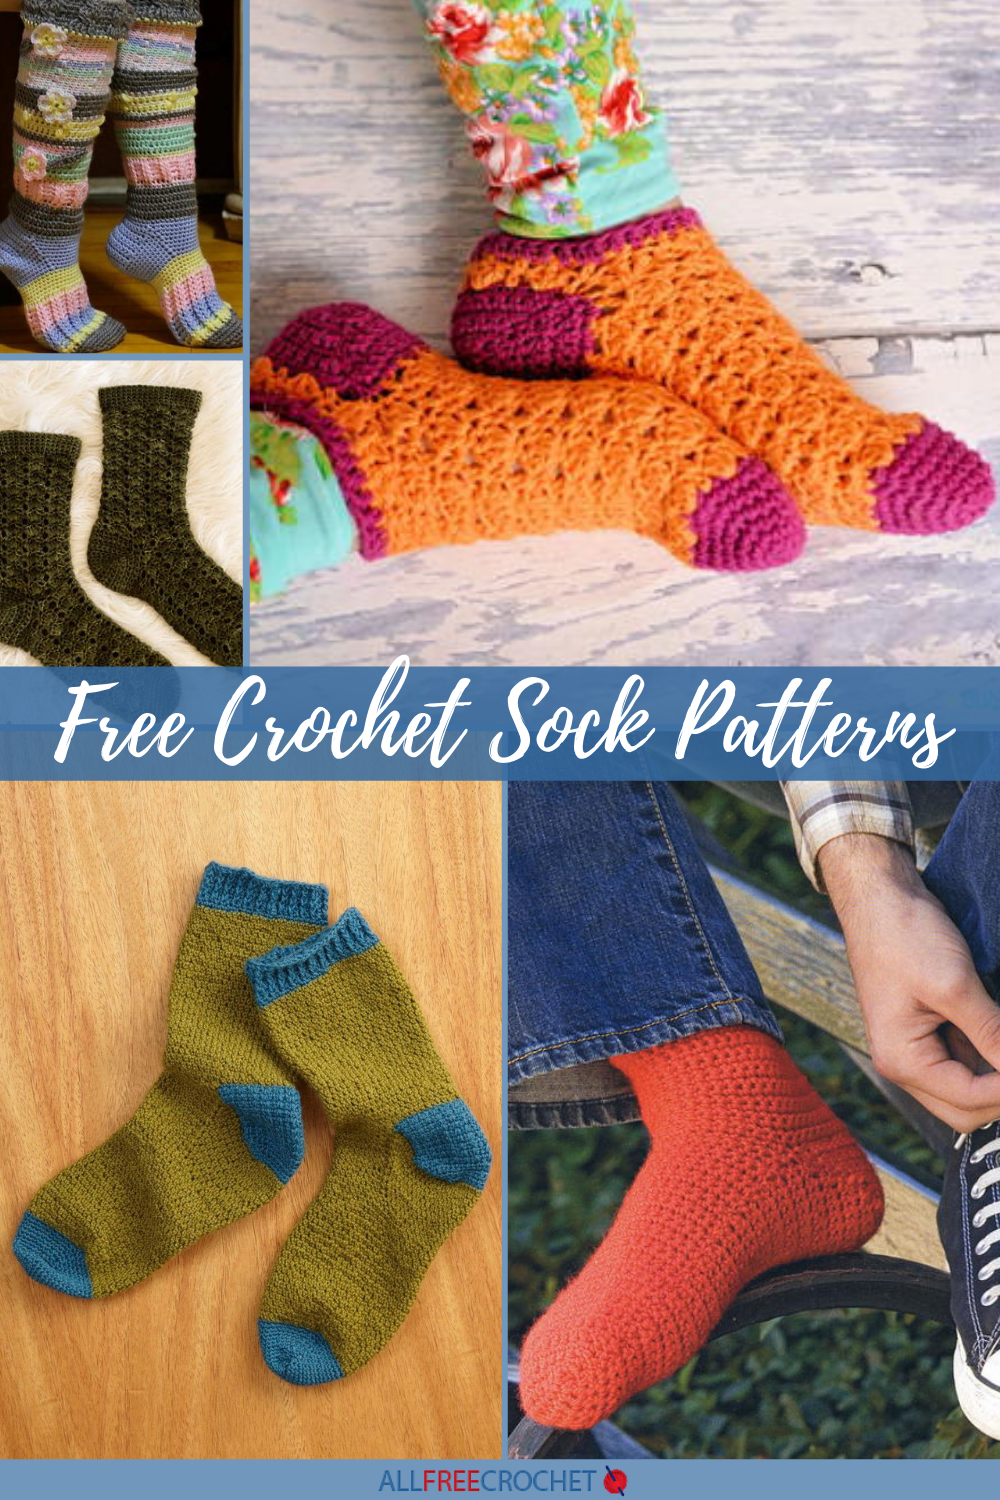 How to Crochet Socks + 5 FREE Crocheted Sock Patterns